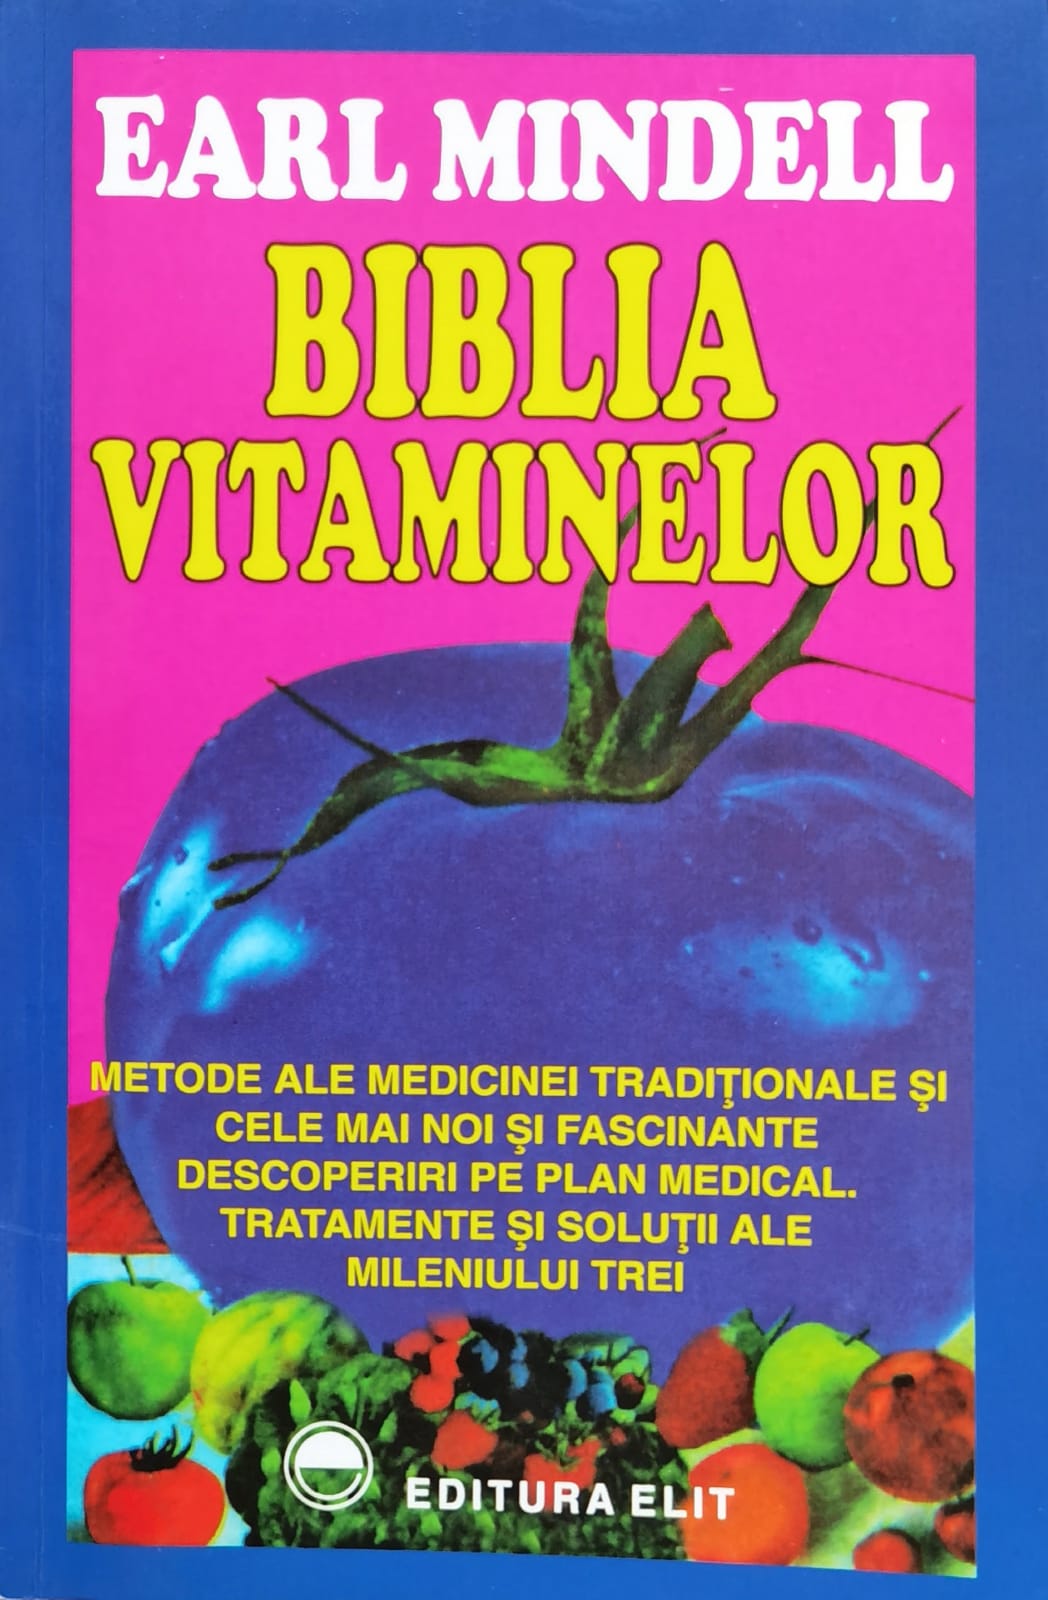 biblia vitaminelor                                                                                   earl mindell                                                                                        